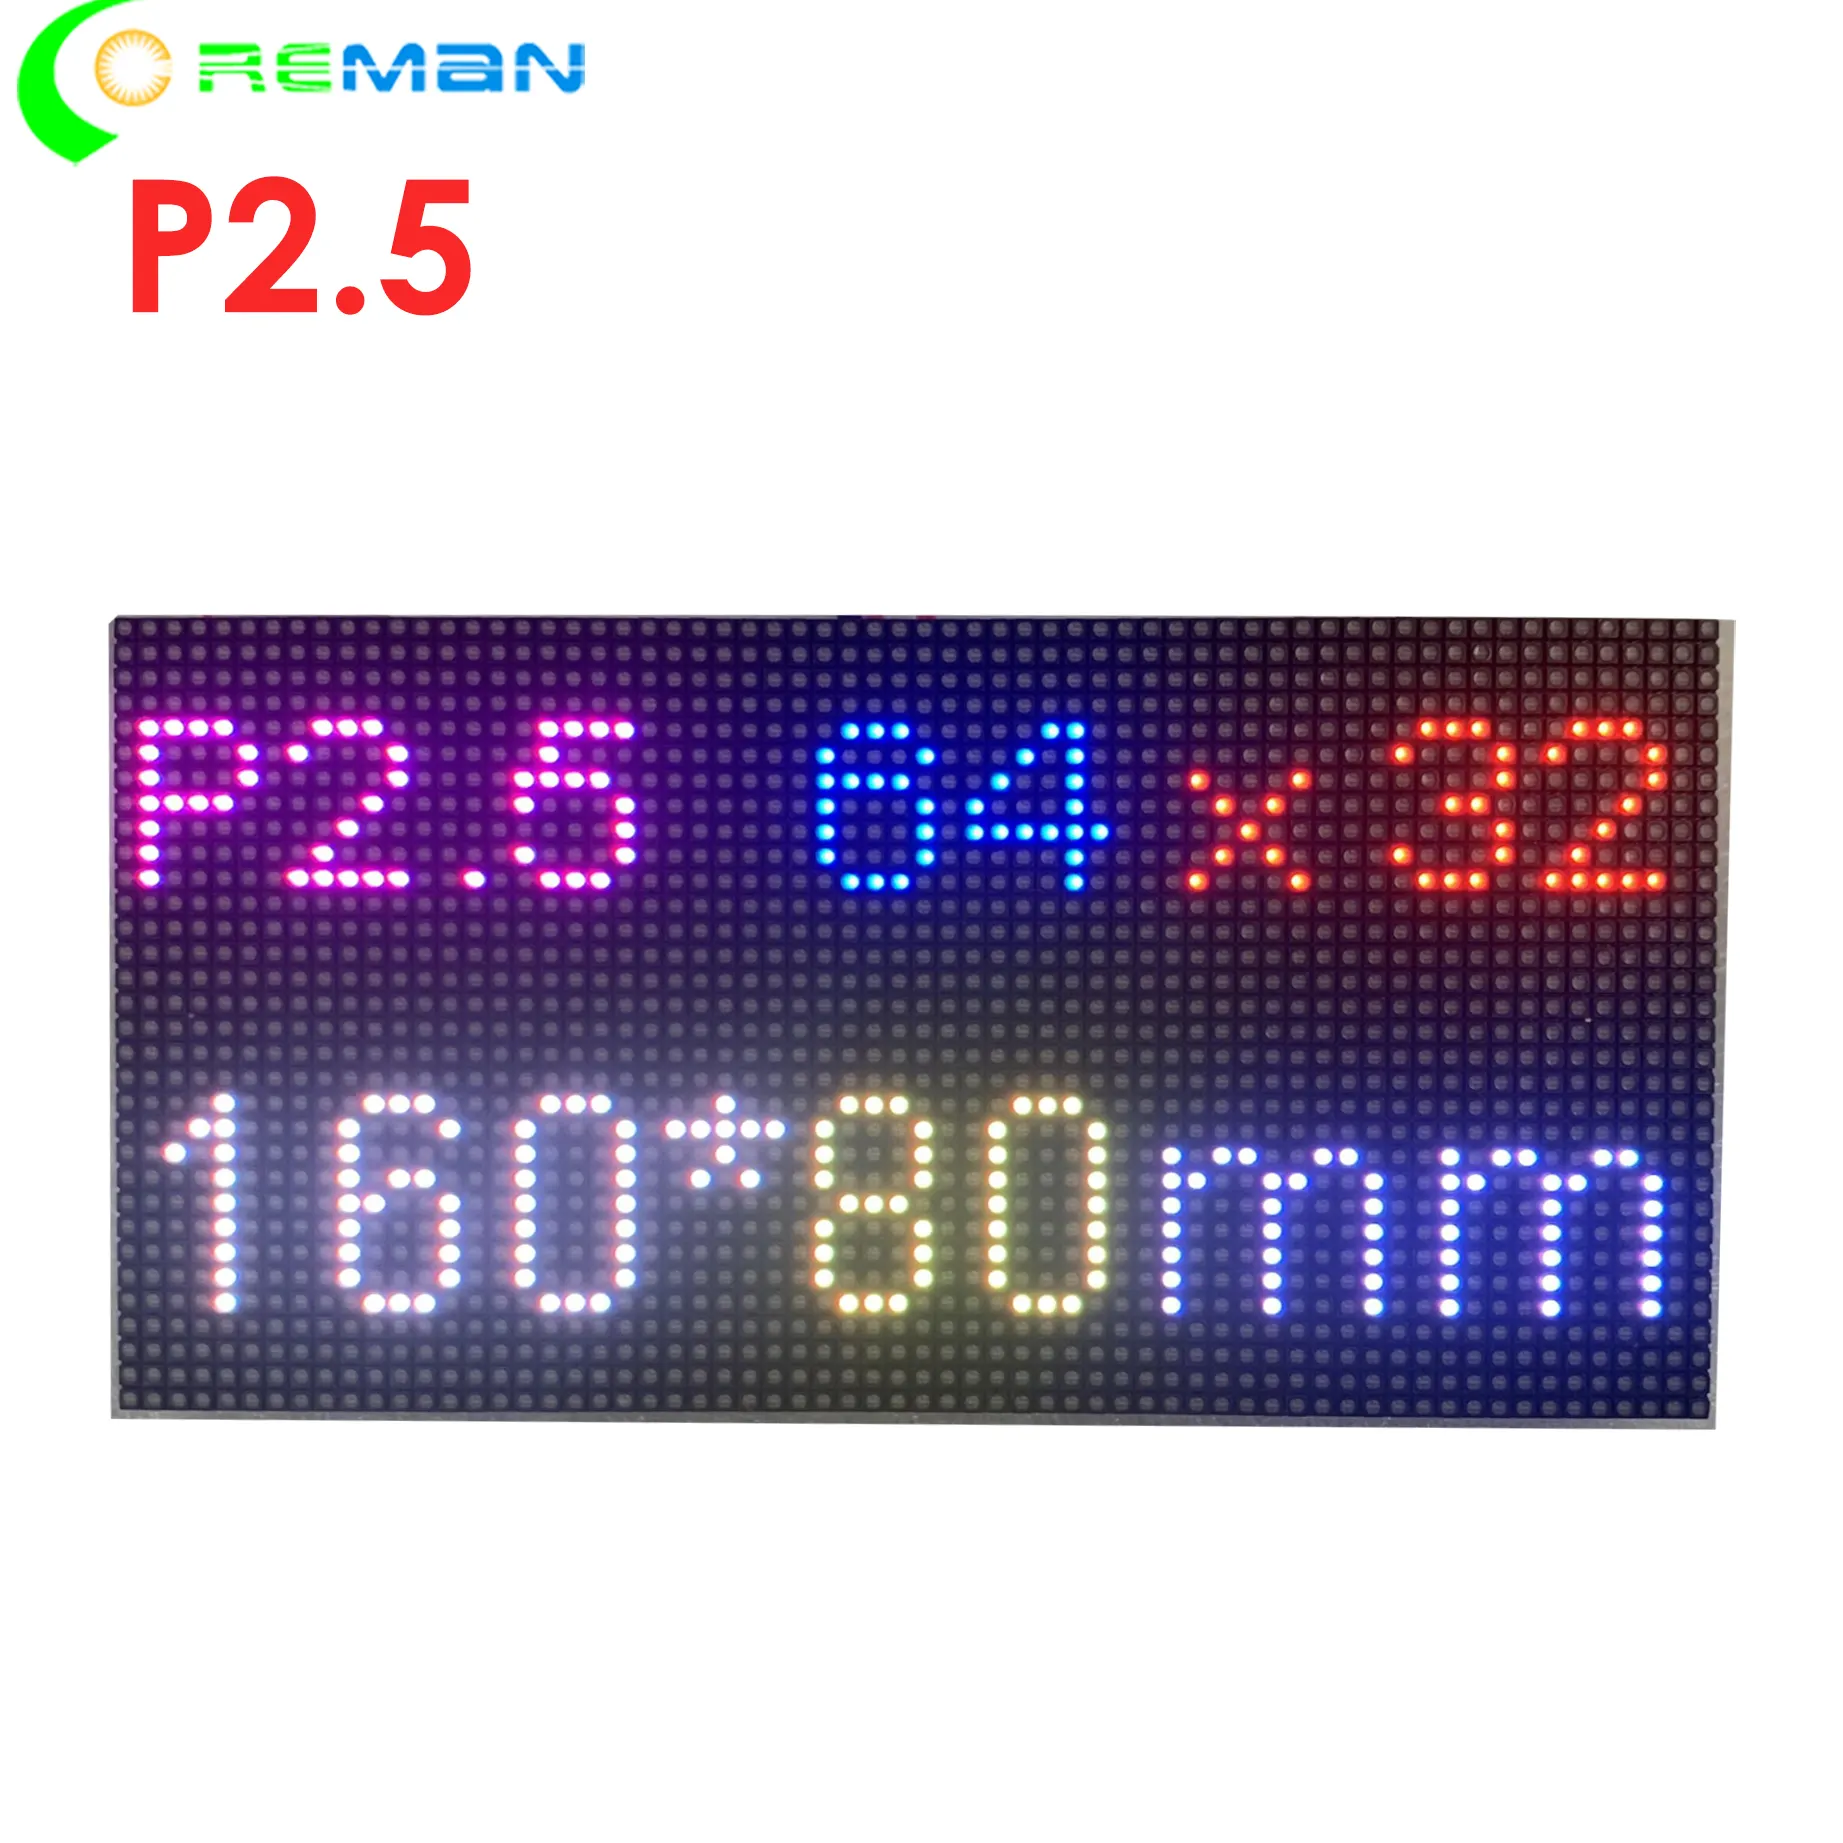 High quality high brightness p2.5 led module HD video wall indoor p2.5 led module 160mmx80mm 64x32 pixels